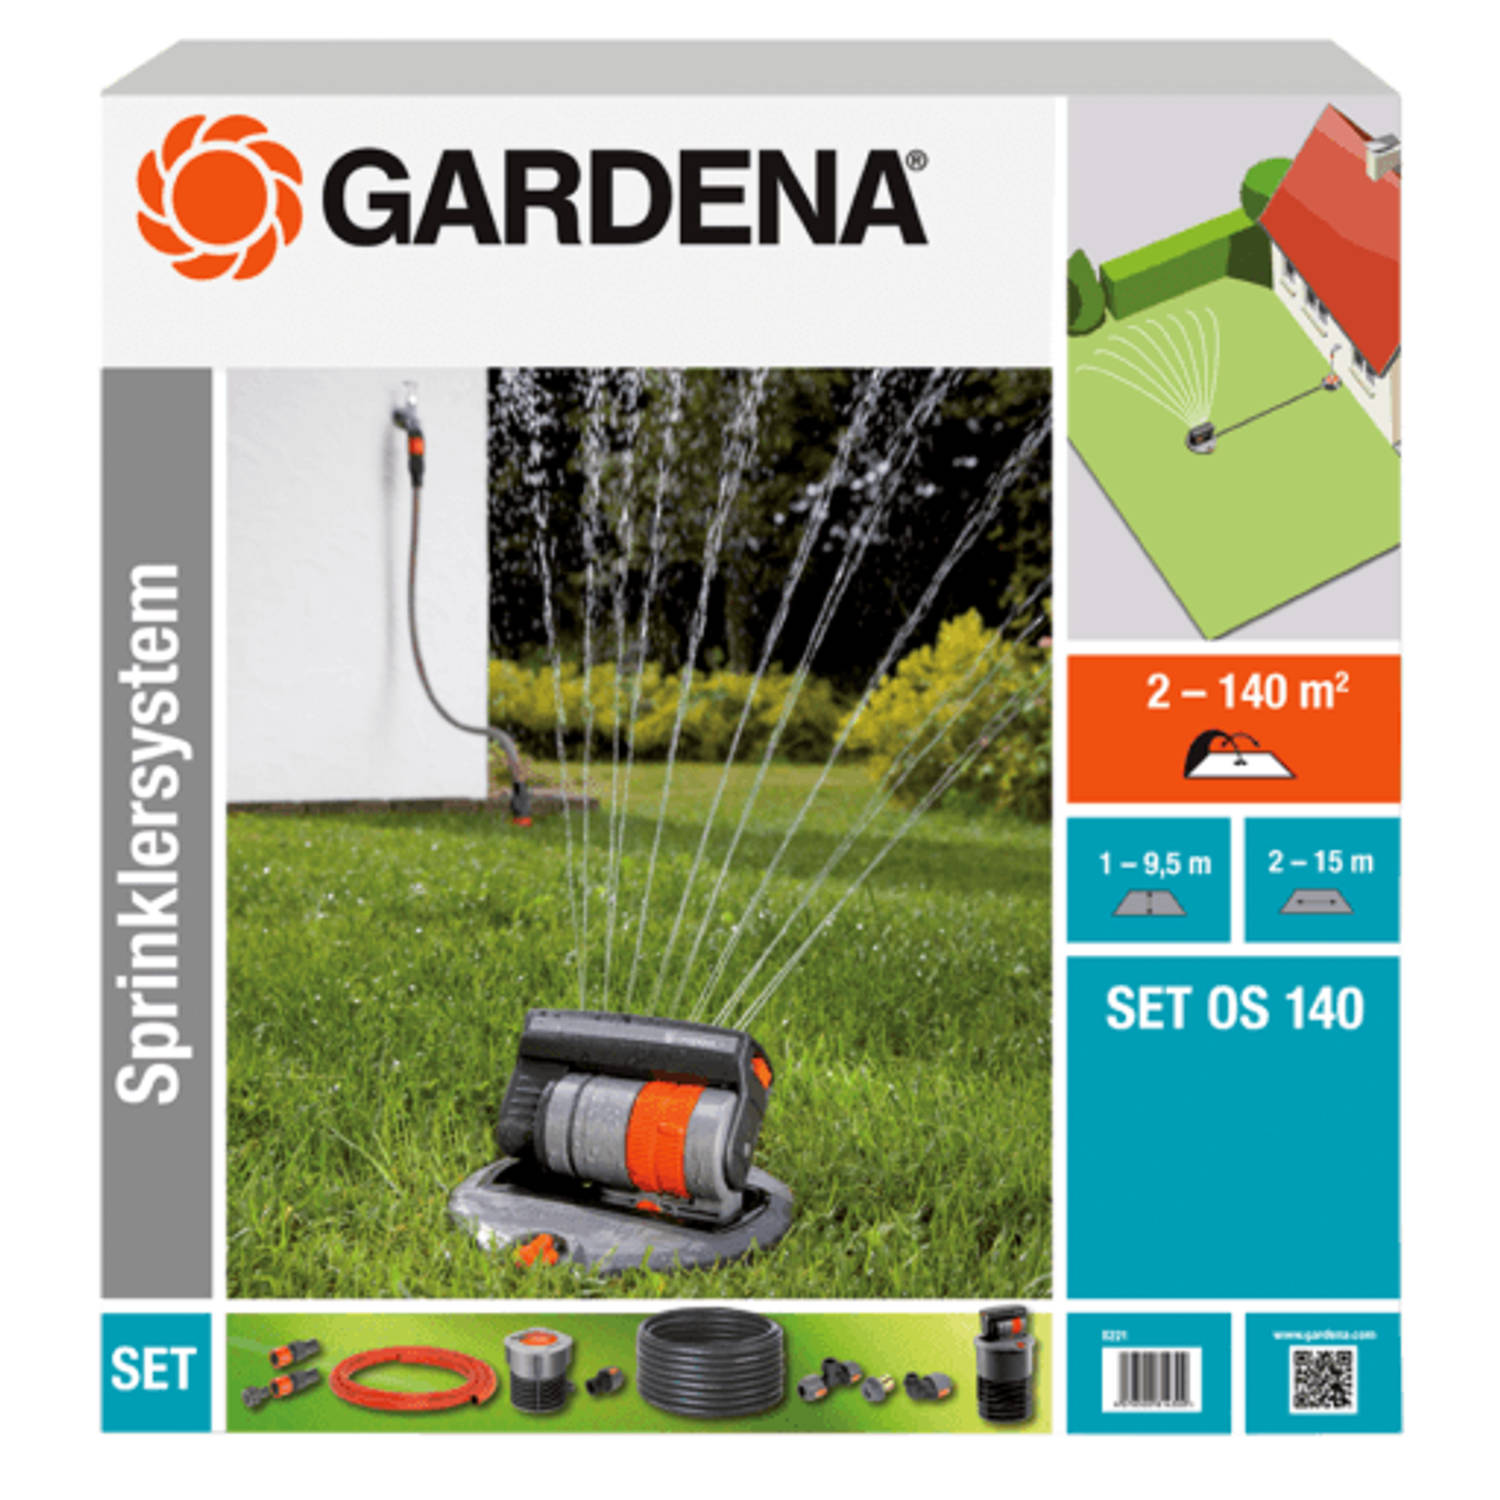 Gardena OS 140 complete-Set